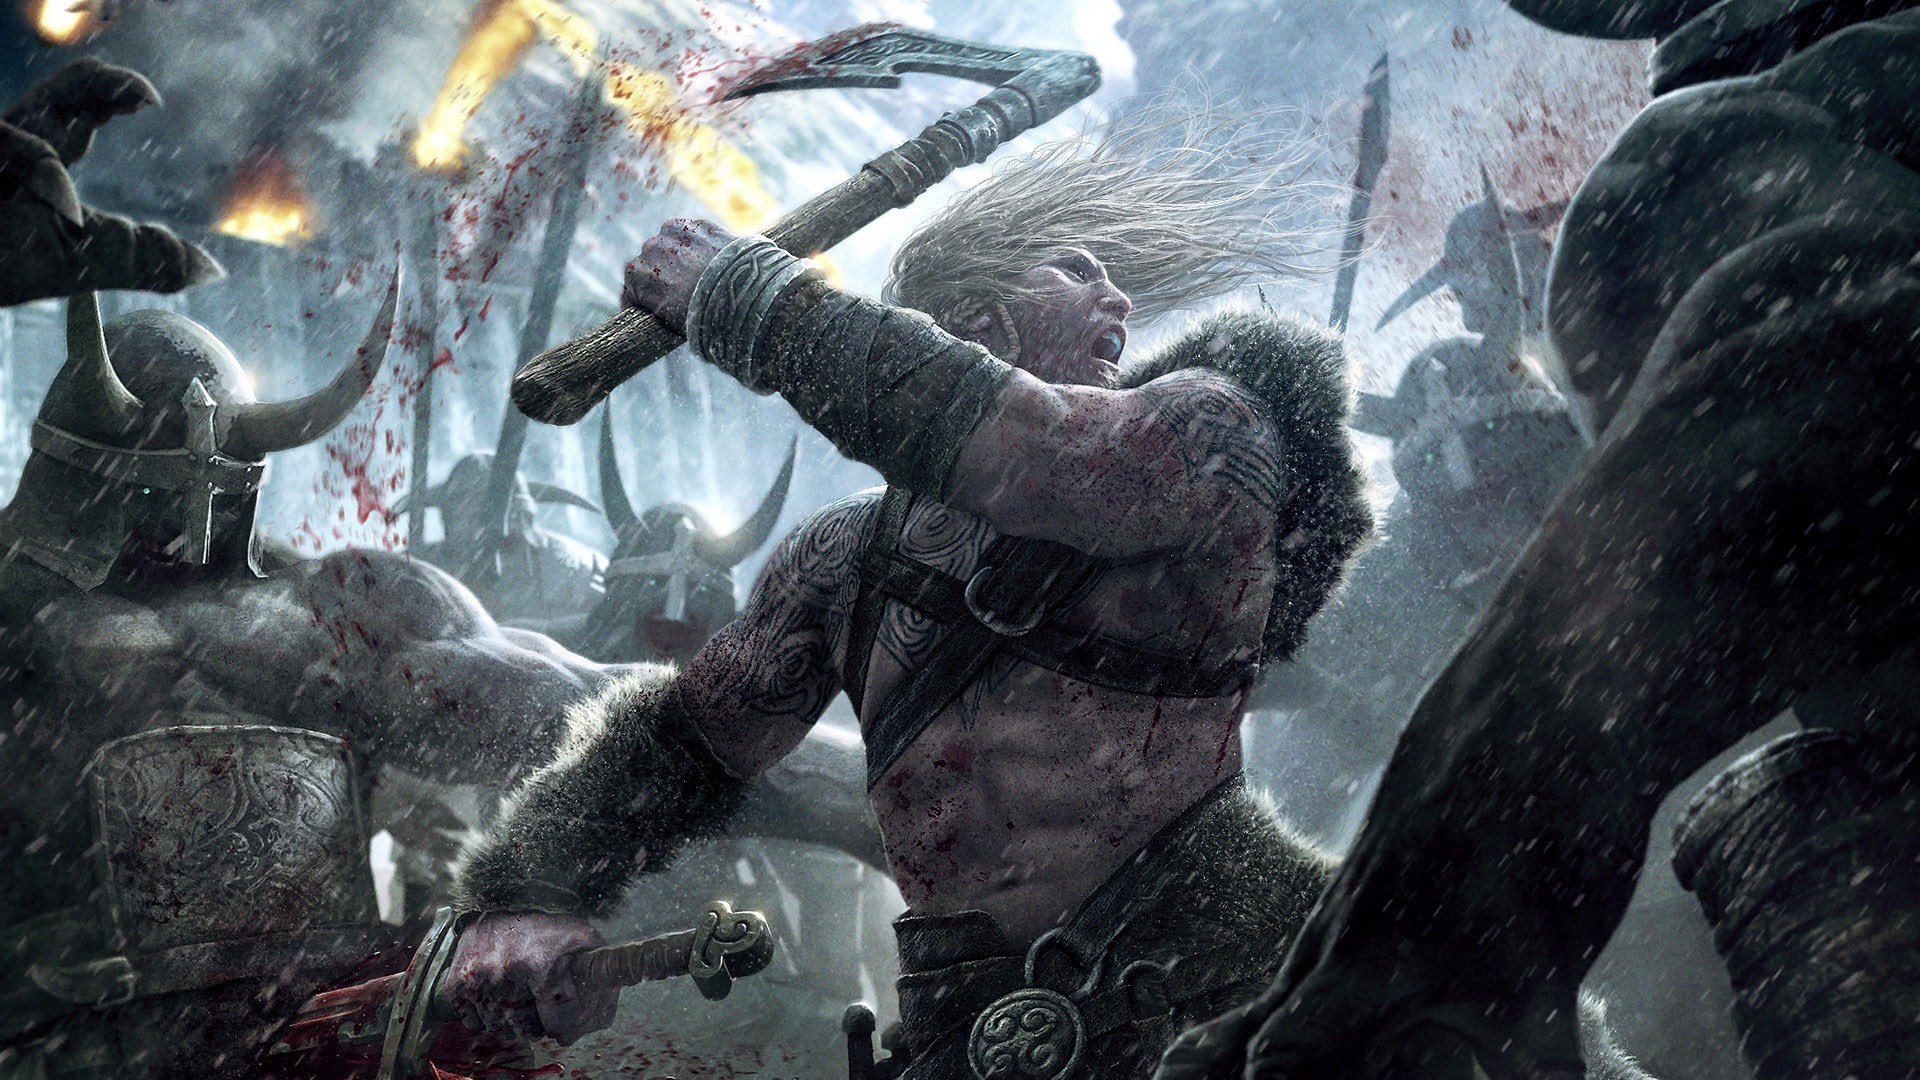 General 1920x1080 fantasy art warrior battle Viking: Battle for Asgard video games weapon blood muscles fantasy men